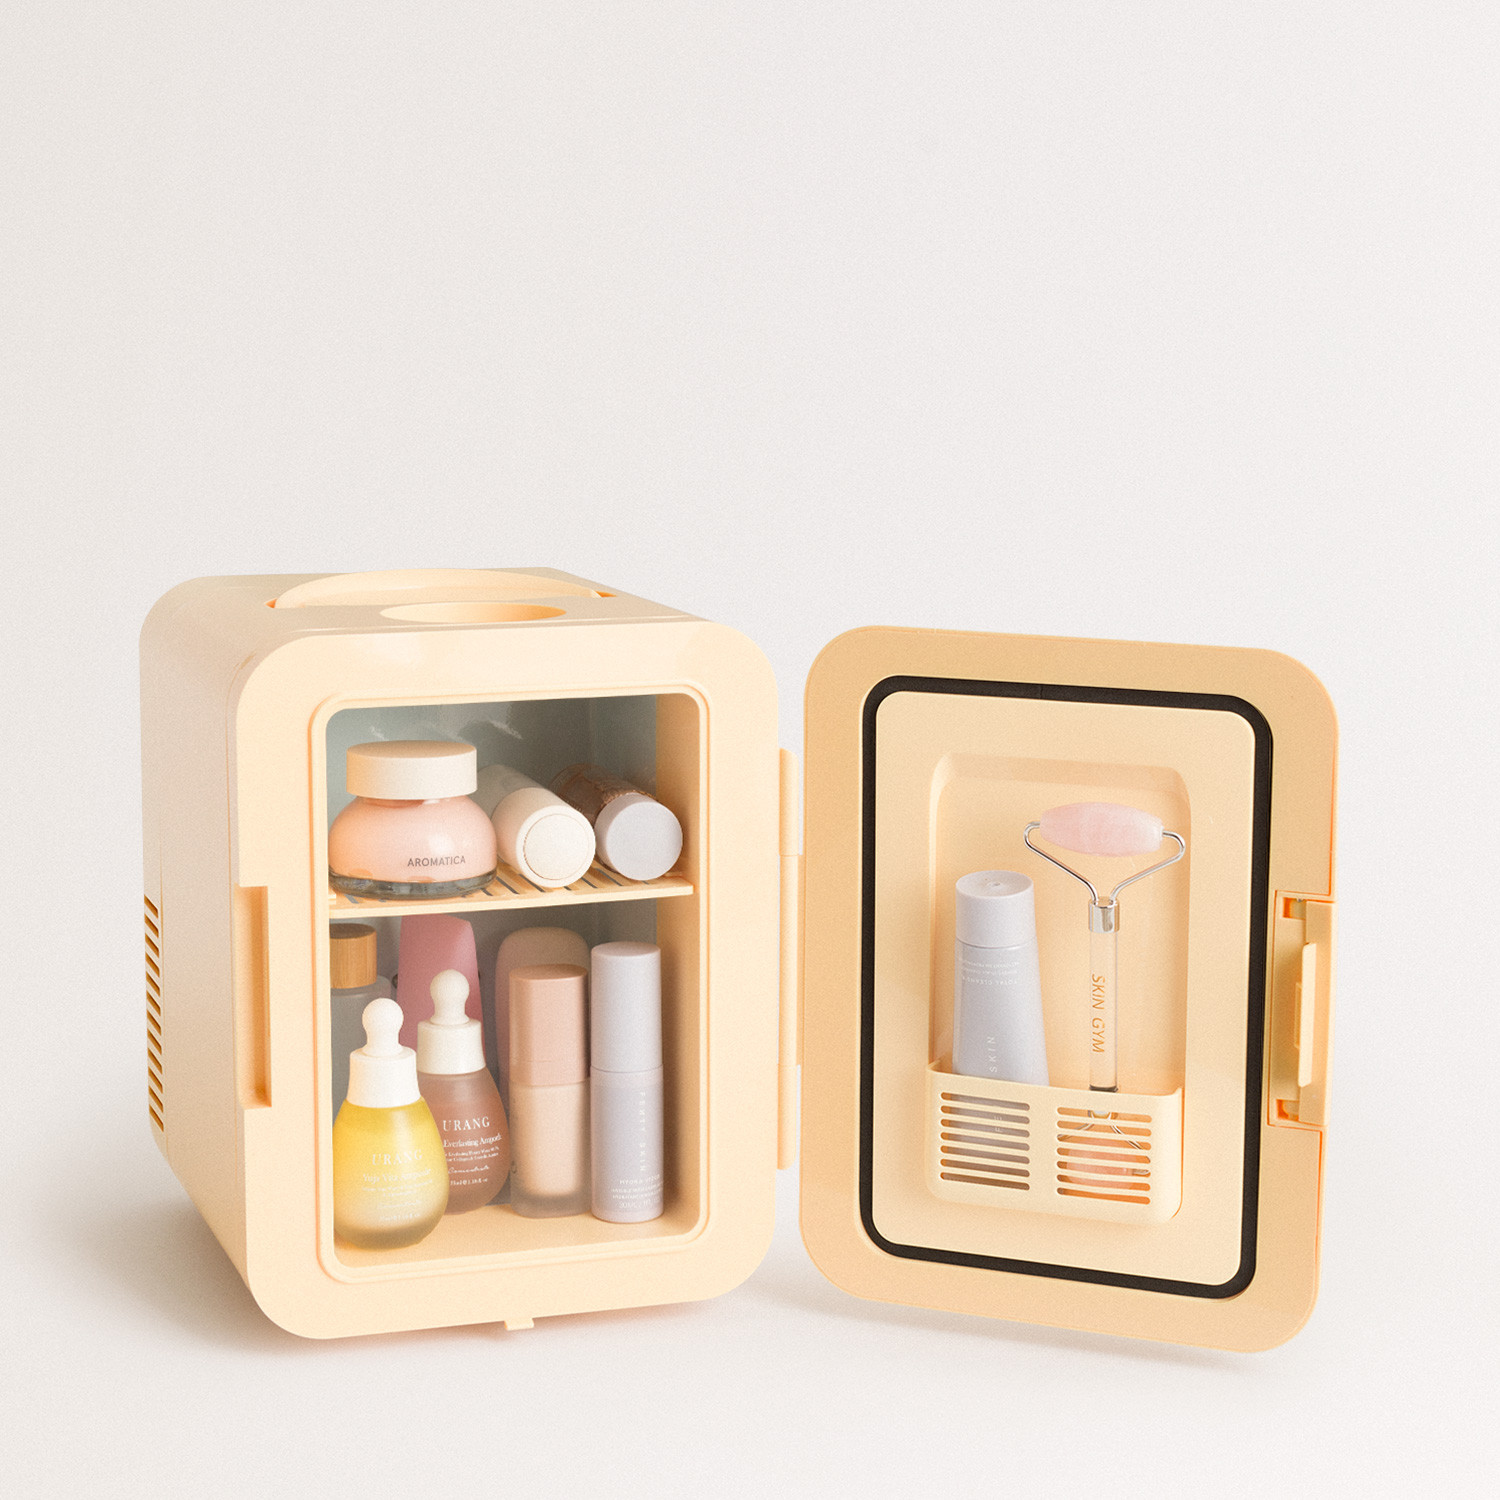 La mini nevera para cosméticos de Create IKOHS es la mejor compra de  belleza del mes